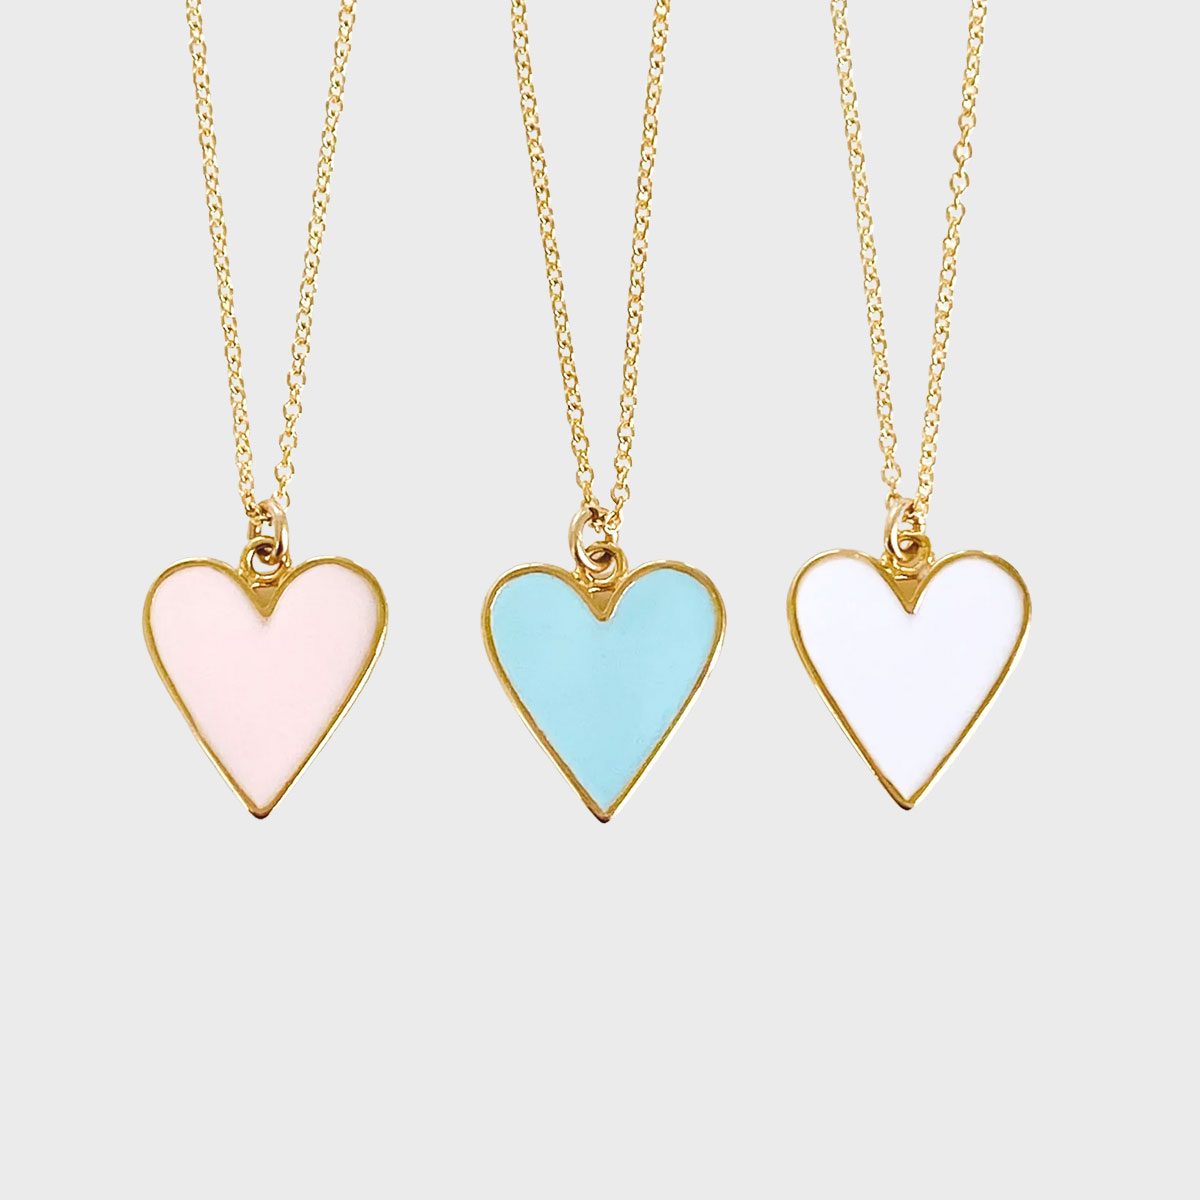 Tangerine Jewelry Shop Heart Pendant Necklace